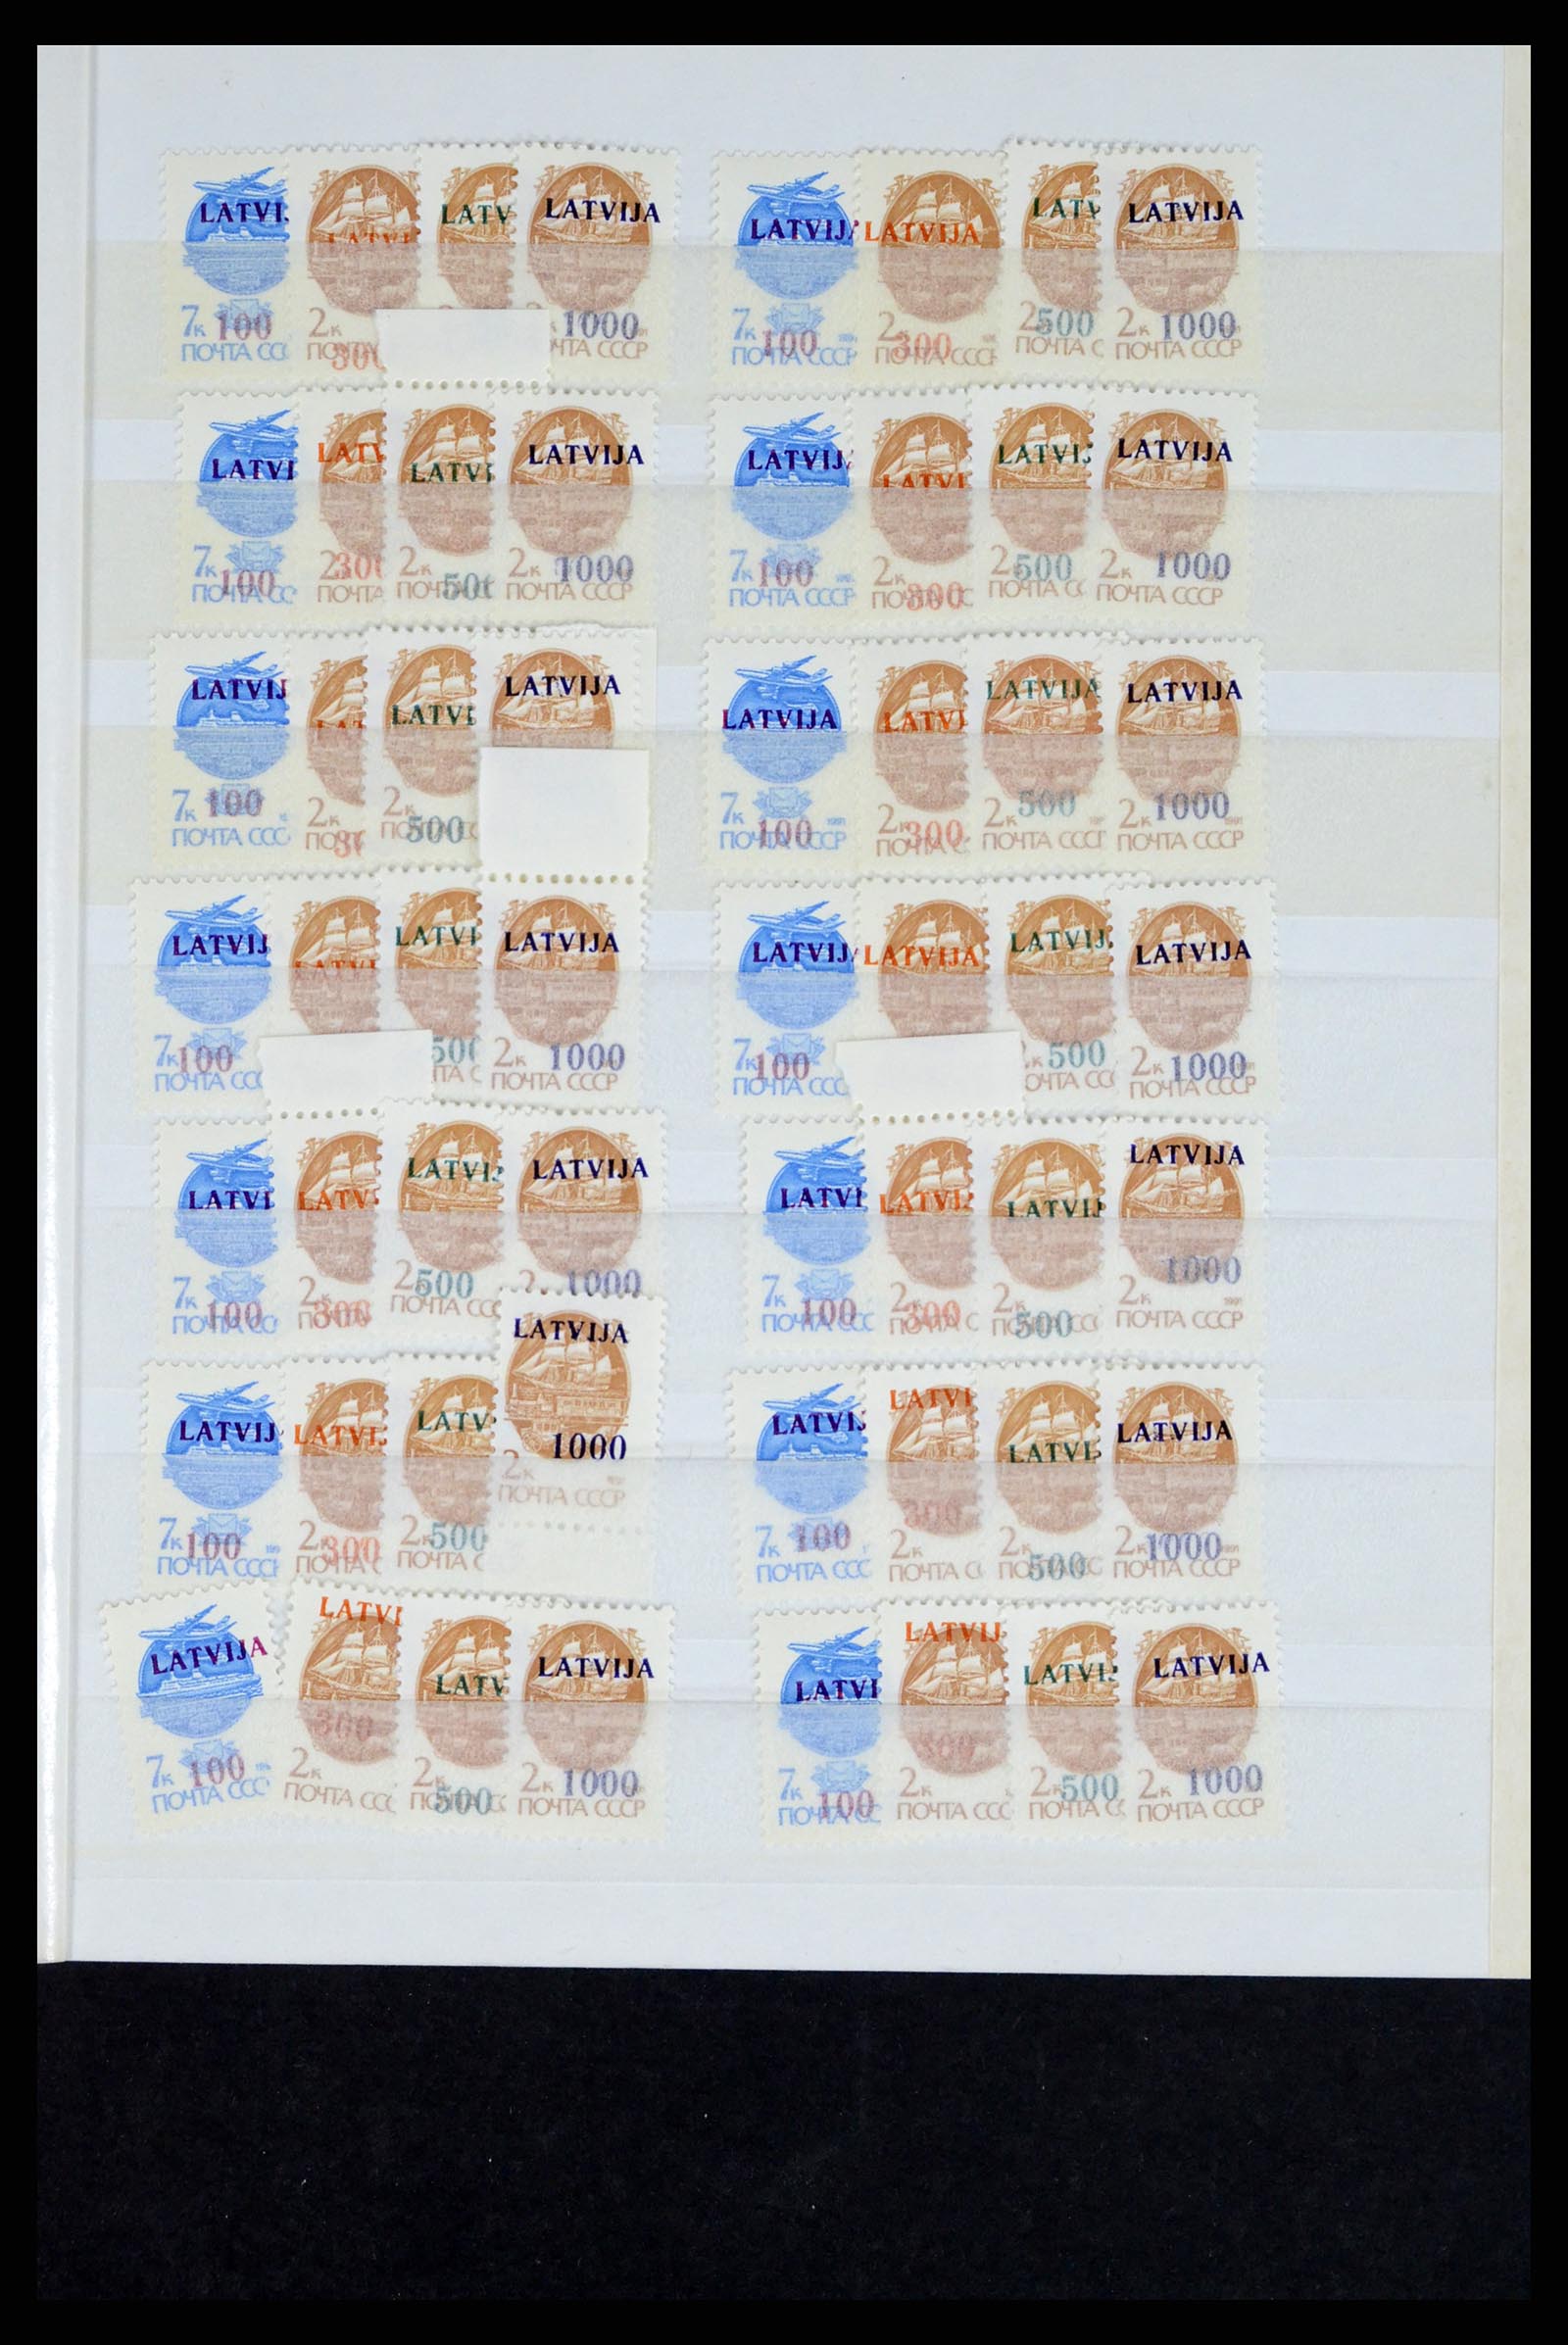 37351 302 - Postzegelverzameling 37351 Europese landen postfris 1990-2000.